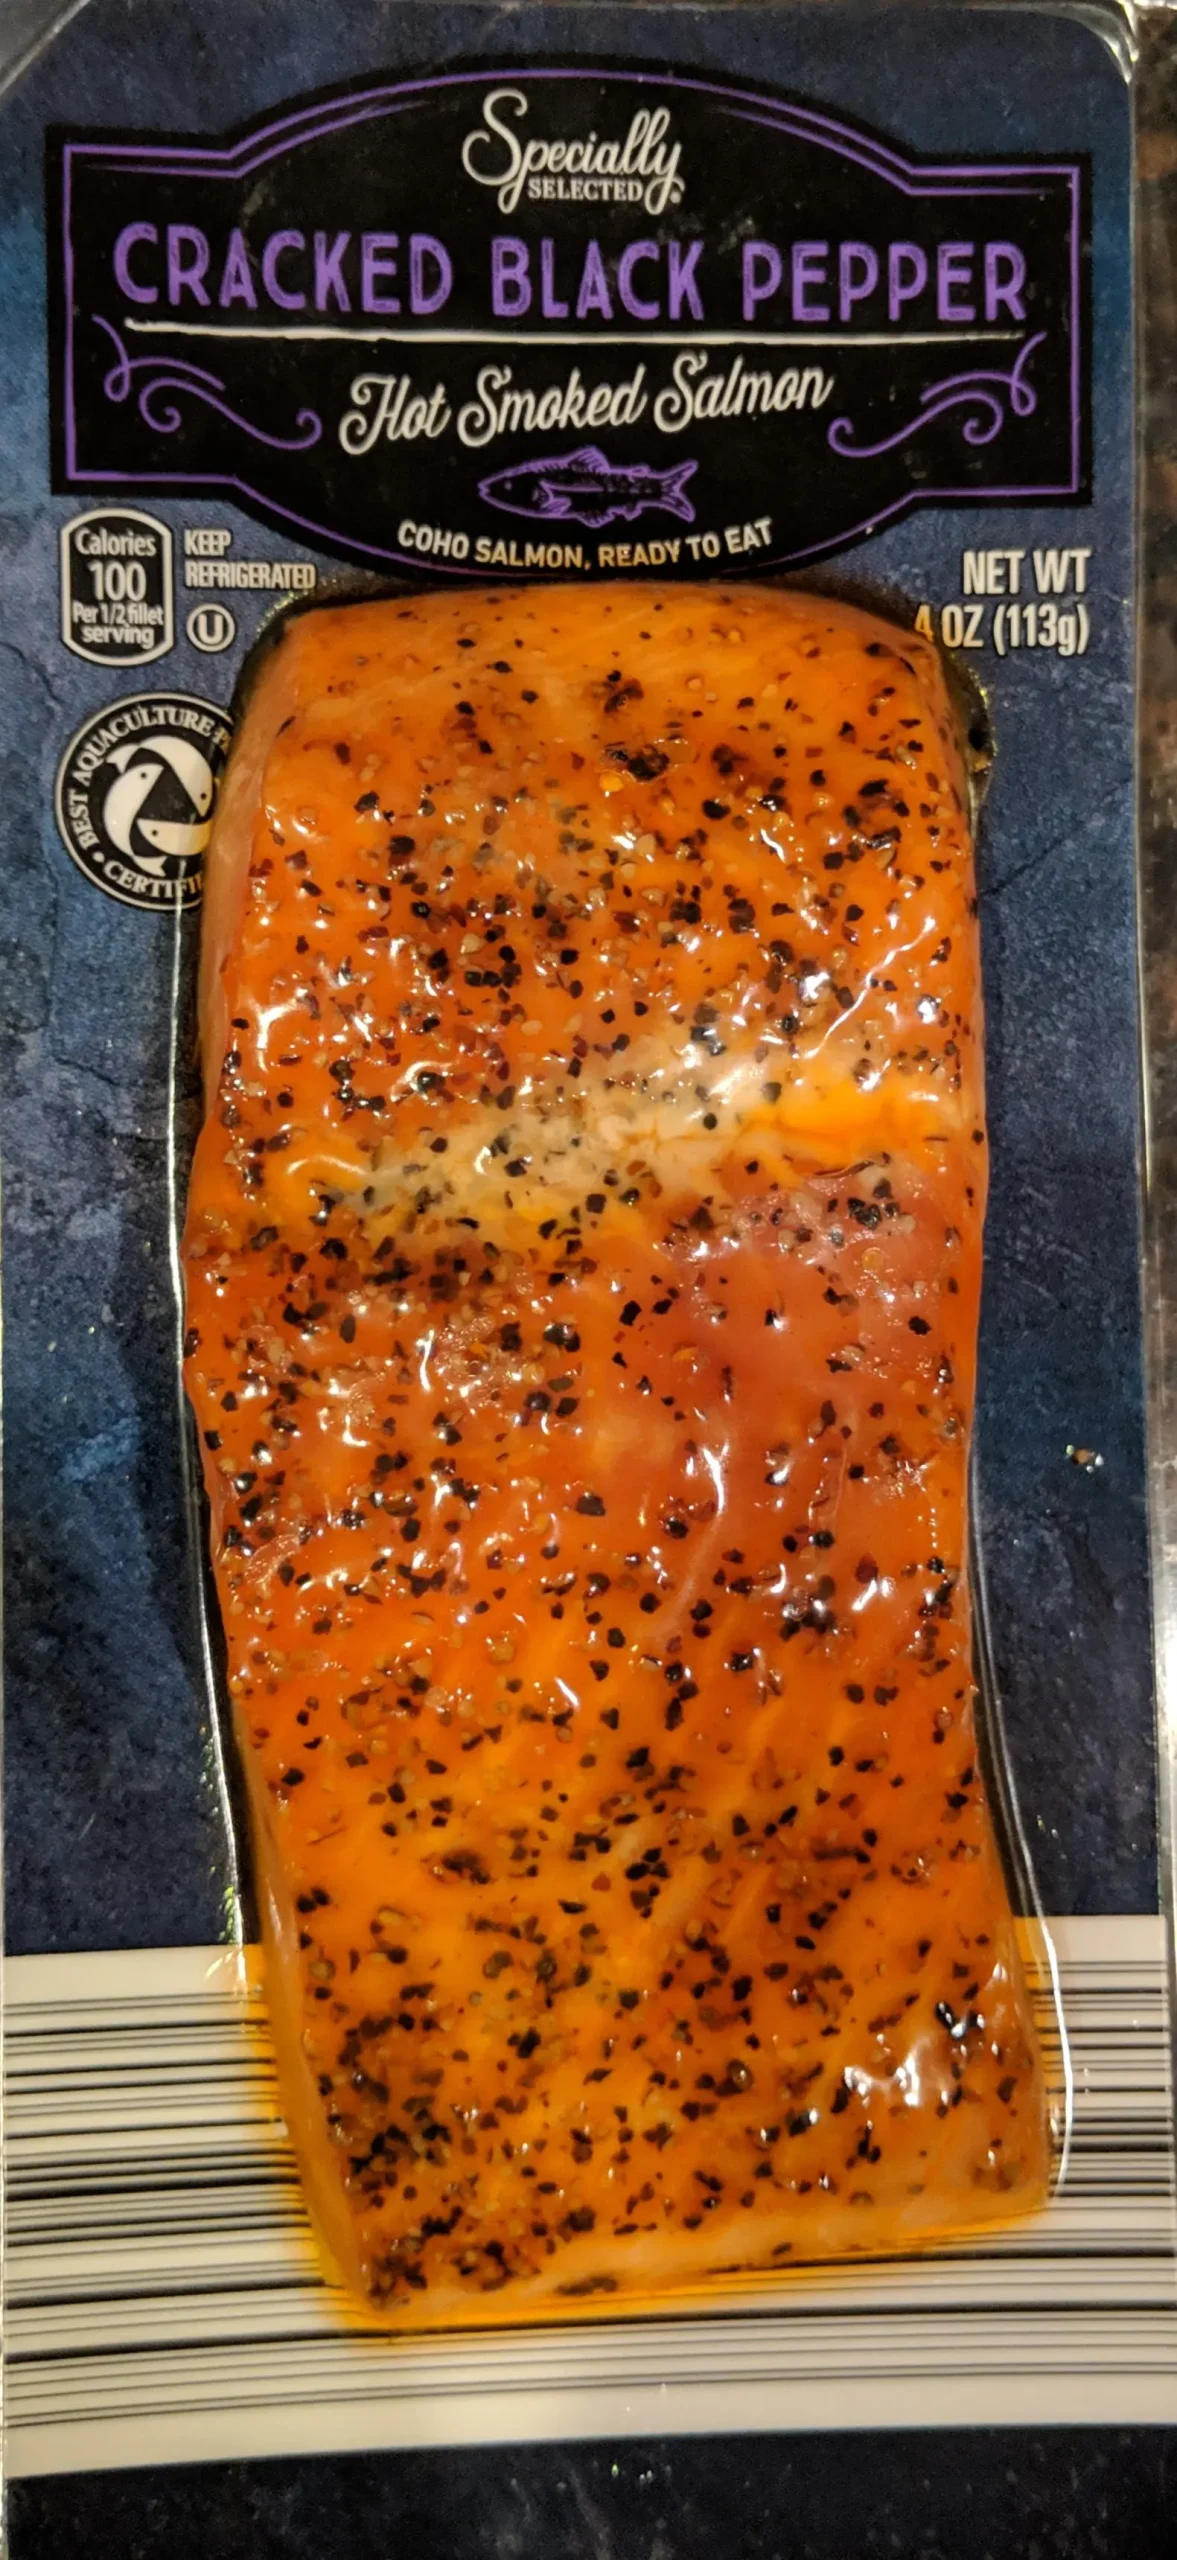 aldi smoked salmon price - Can ALDI smoked salmon be frozen